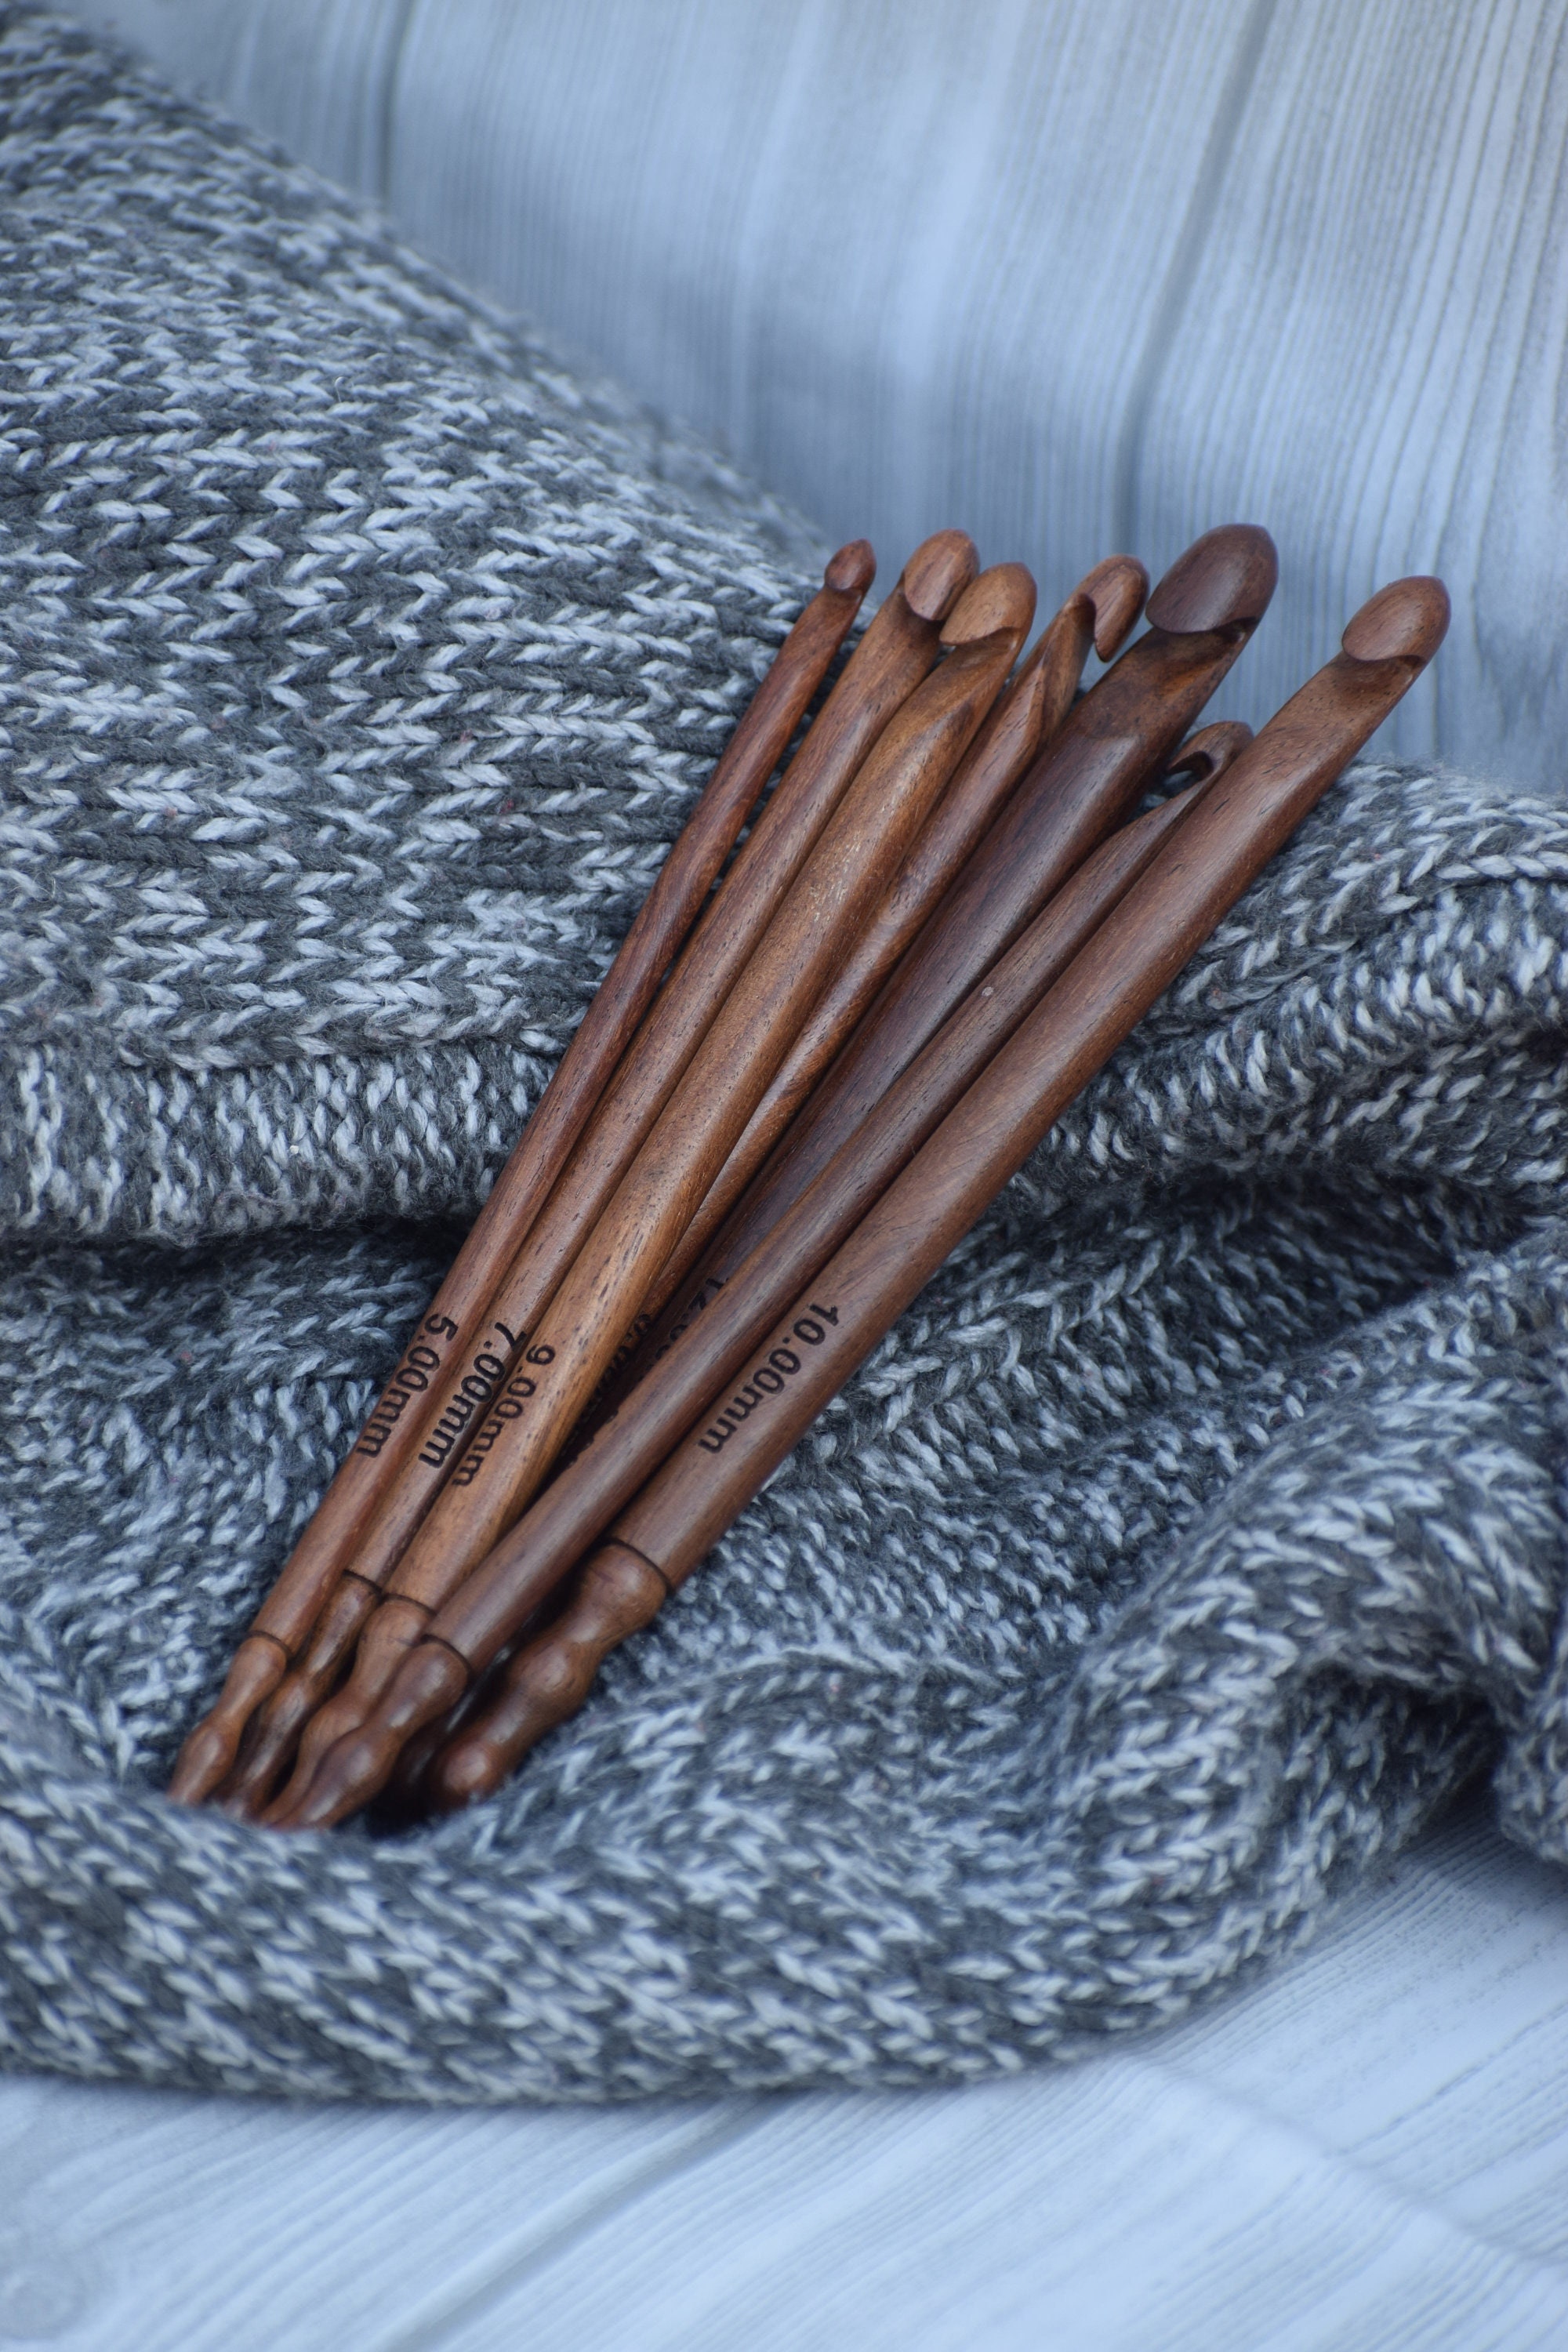 15.7 40cm Bamboo Circular Knitting Needles Sizes US 0 2.0mm 1 2.25mm 2  3.75mm 3 3.25mm 4 3.5mm 5 3.75mm 6 4.0mm 7 4.5mm 40 Cm 